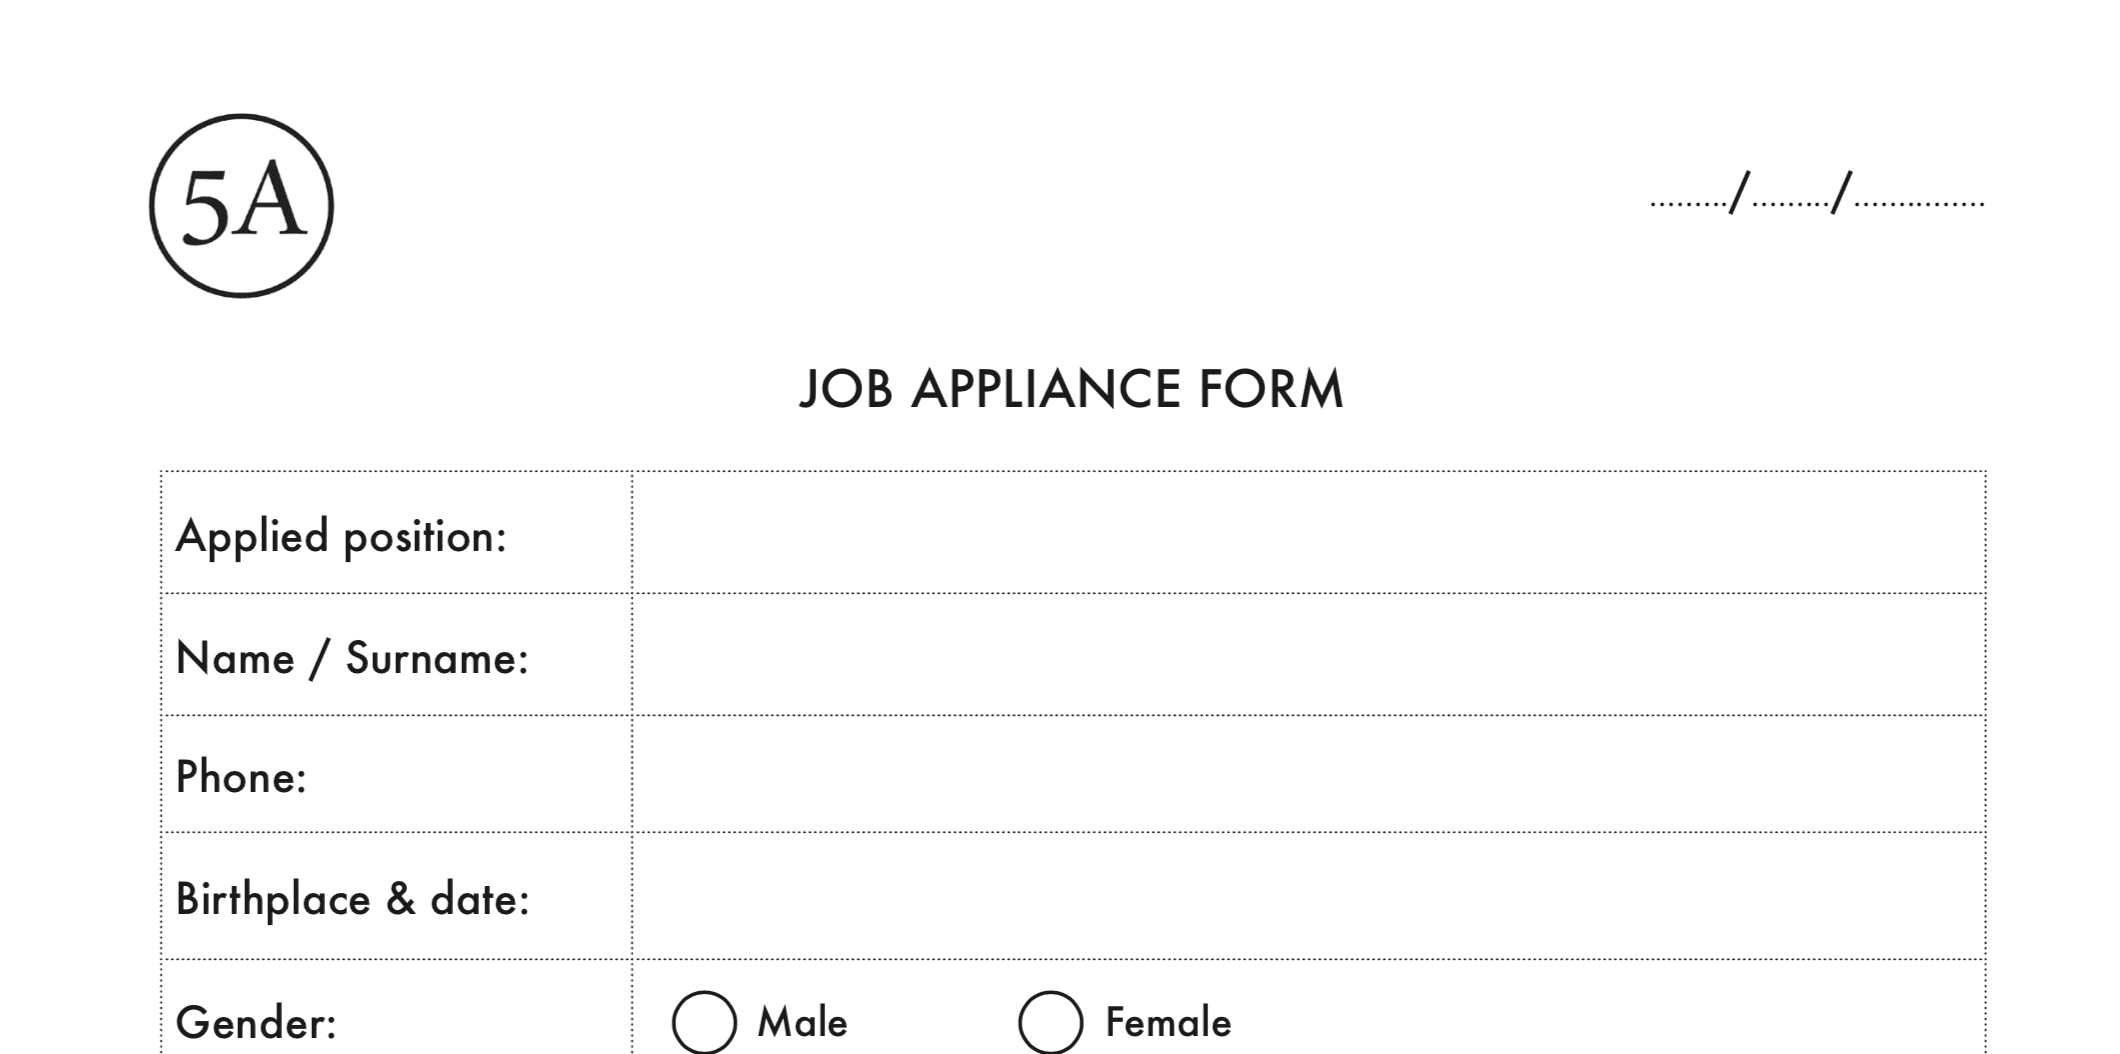 5A job appliance form